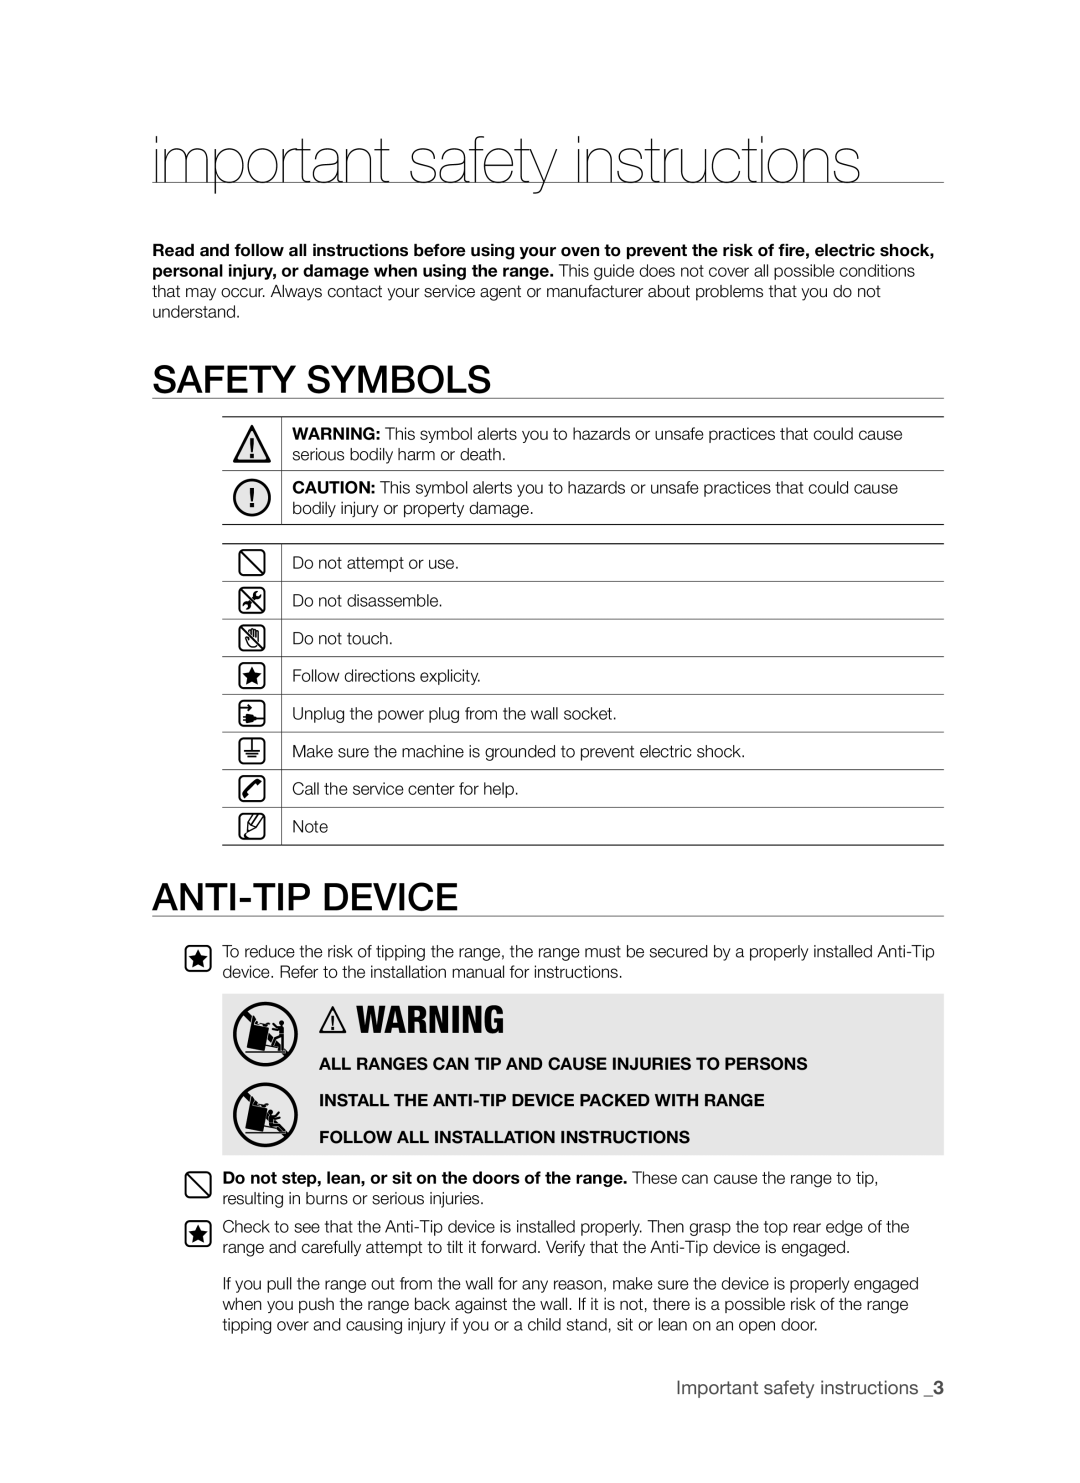 Samsung FTQ352IWUB important safety instructions, Safety Symbols, Anti-Tipdevice, Important safety instructions  